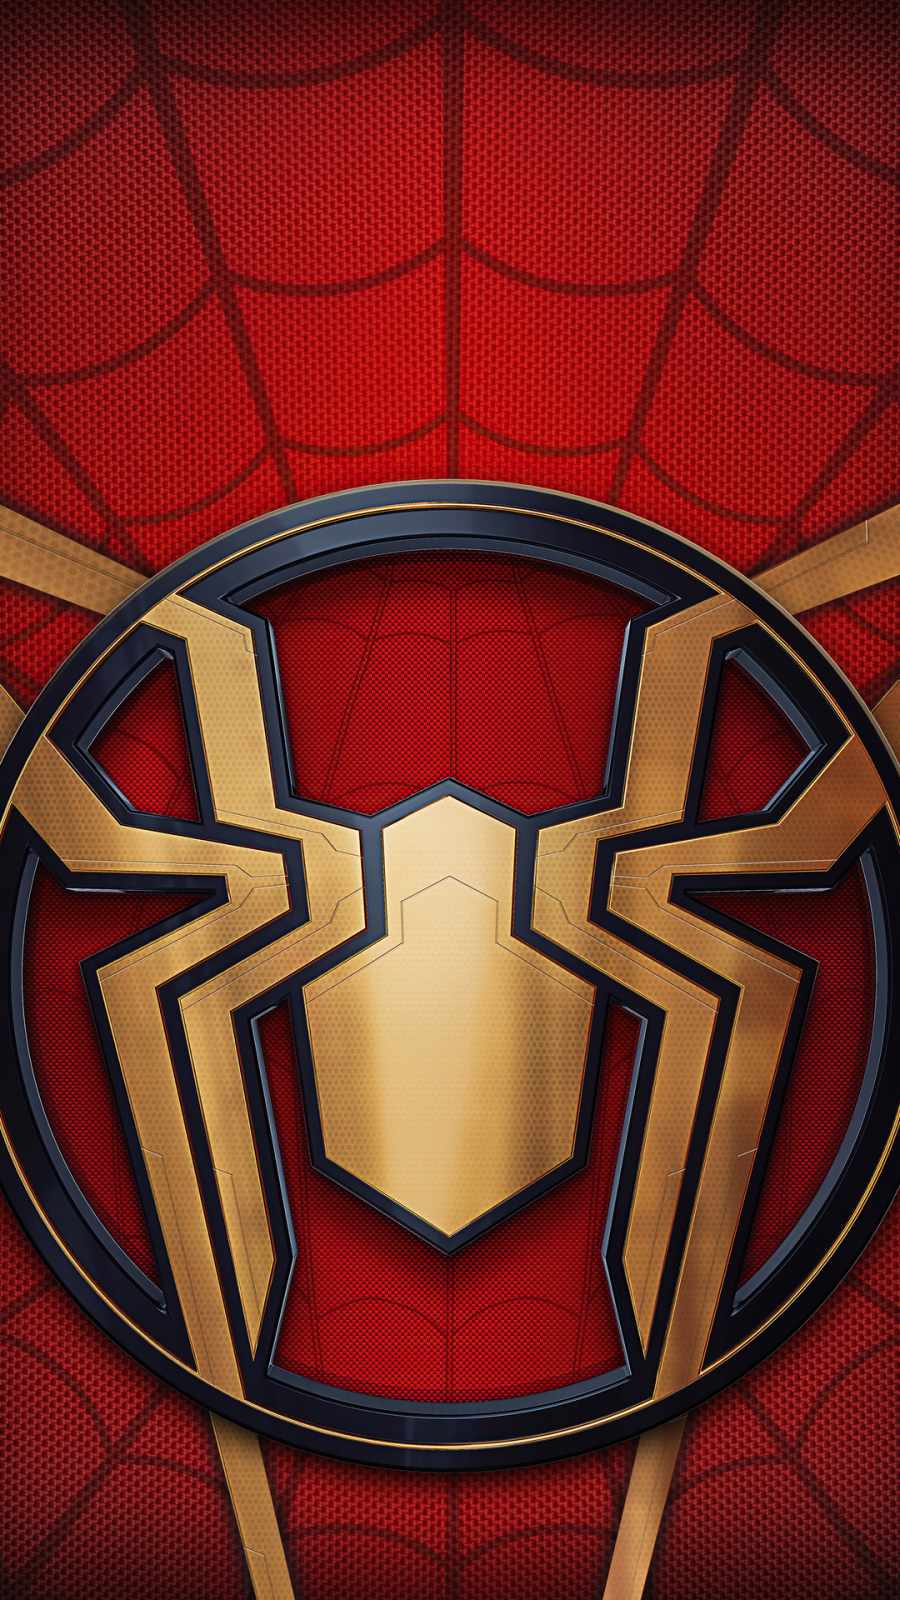 Spider Man 3D IPhone Wallpaper - IPhone Wallpapers : iPhone Wallpapers